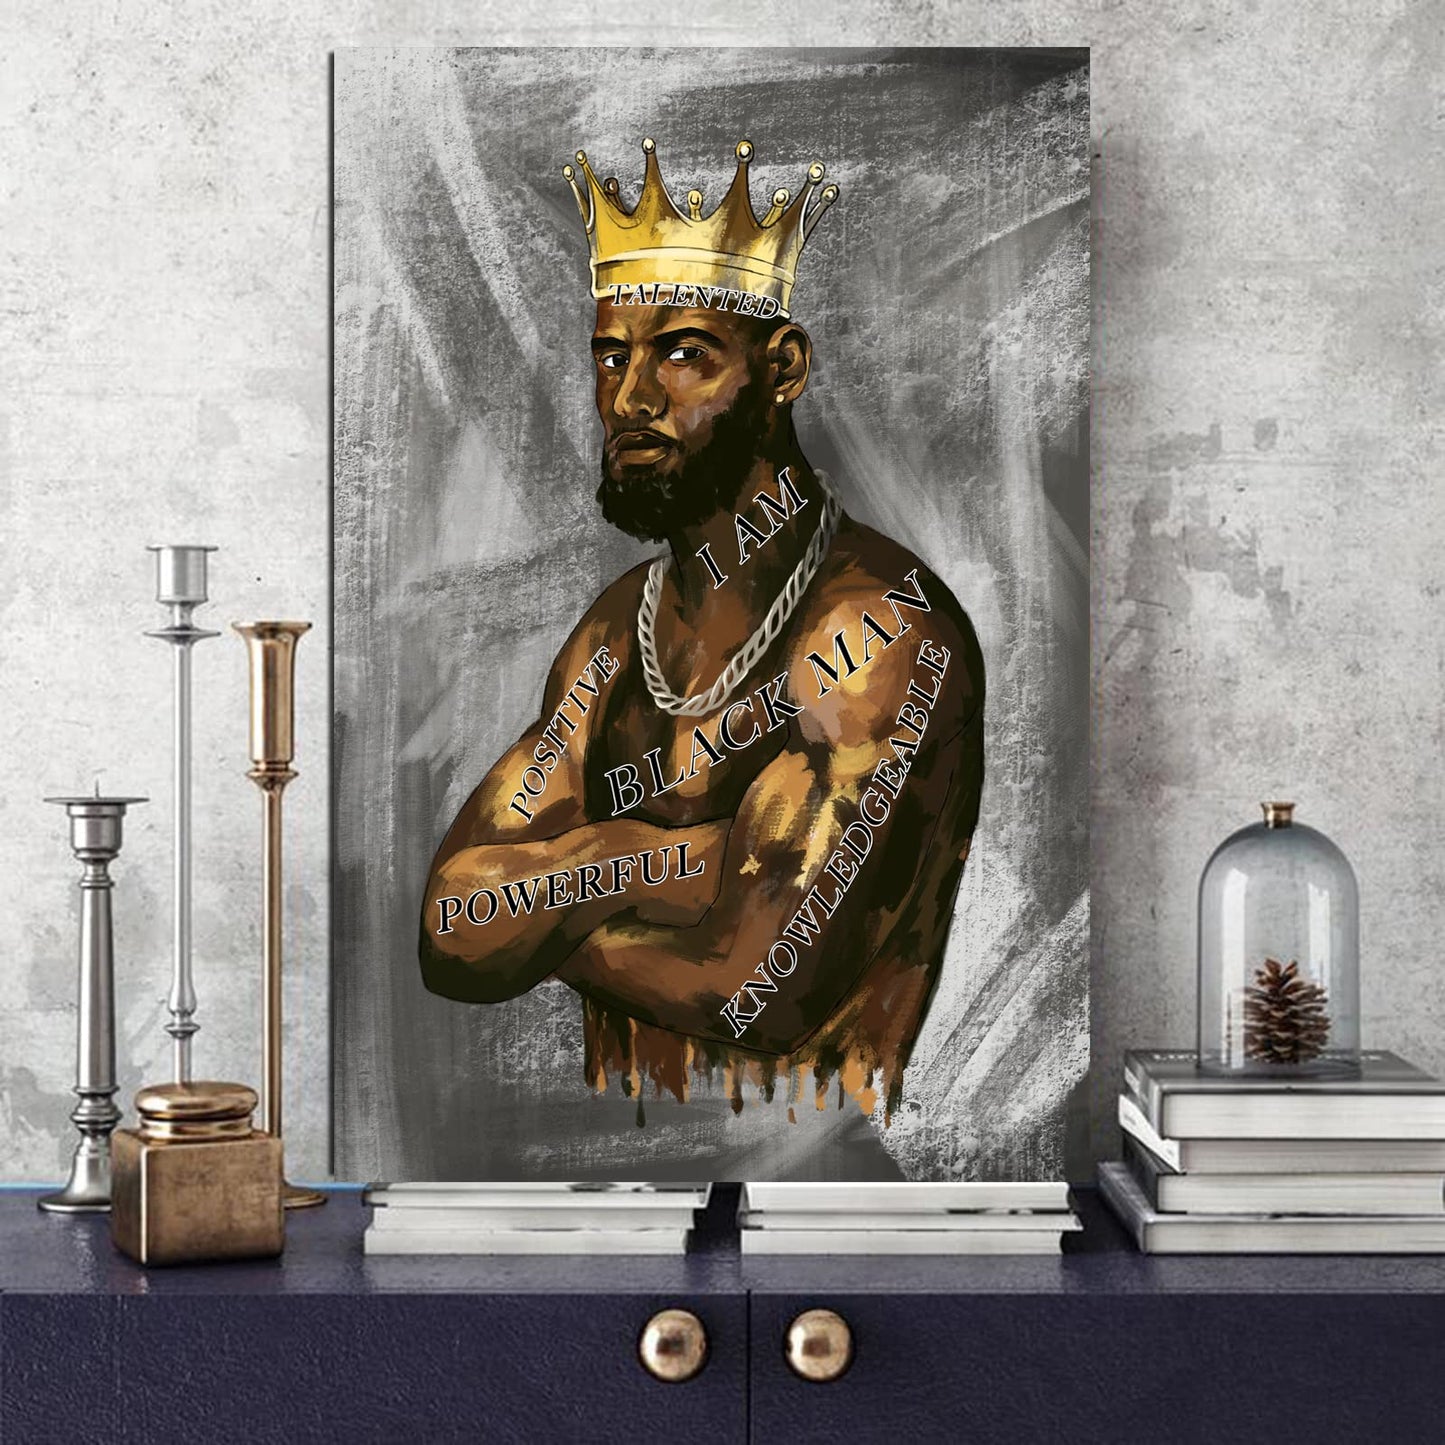 Black Man Poster Wall Art African American Man Portrait Room Decor Black King Inspirational Poster Canvas Prints 16X24 inch